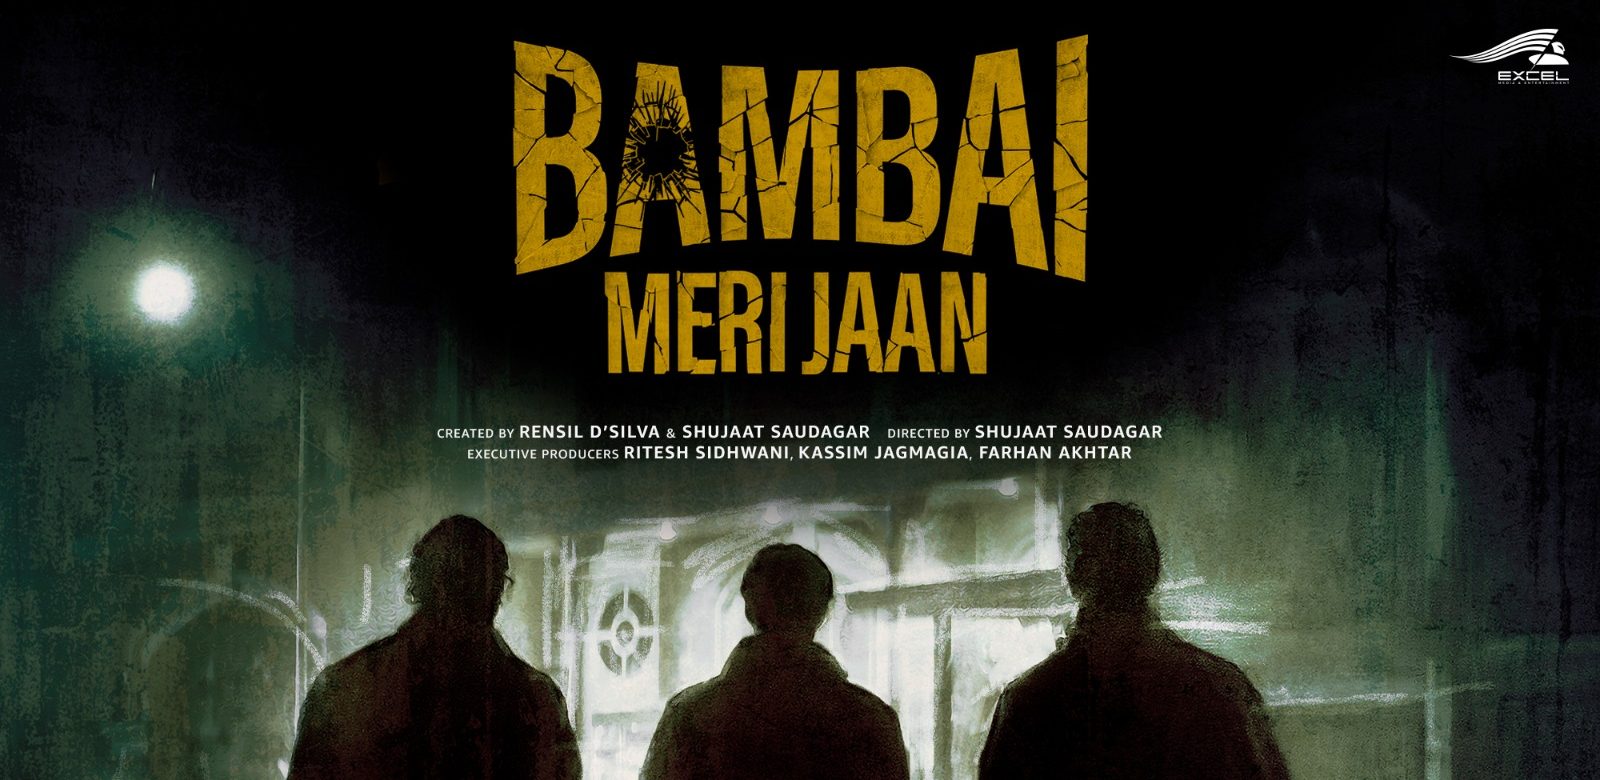 A riveting crime drama, Bambai Meri Jaan, to premiere on September 14!